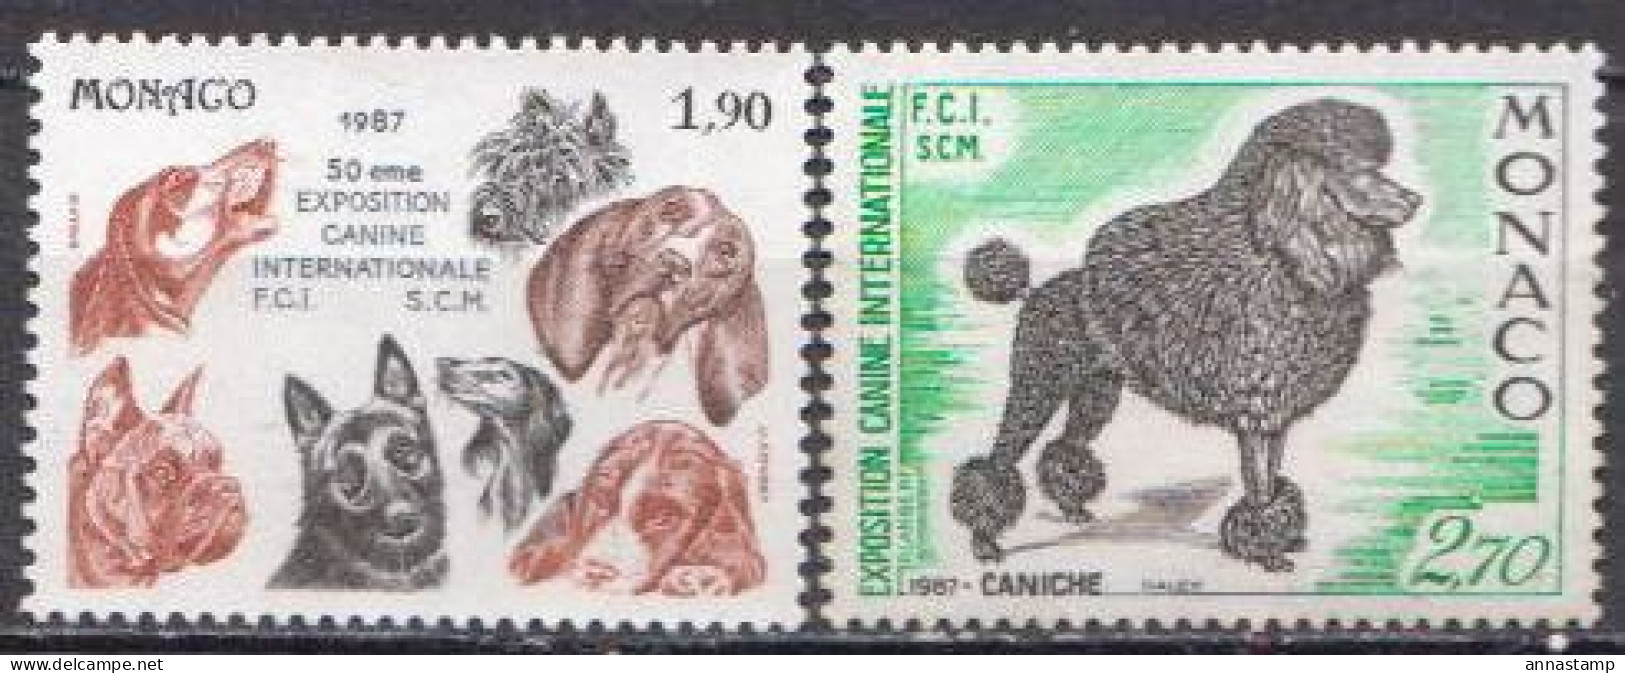 Monaco MNH Stamps - Cani